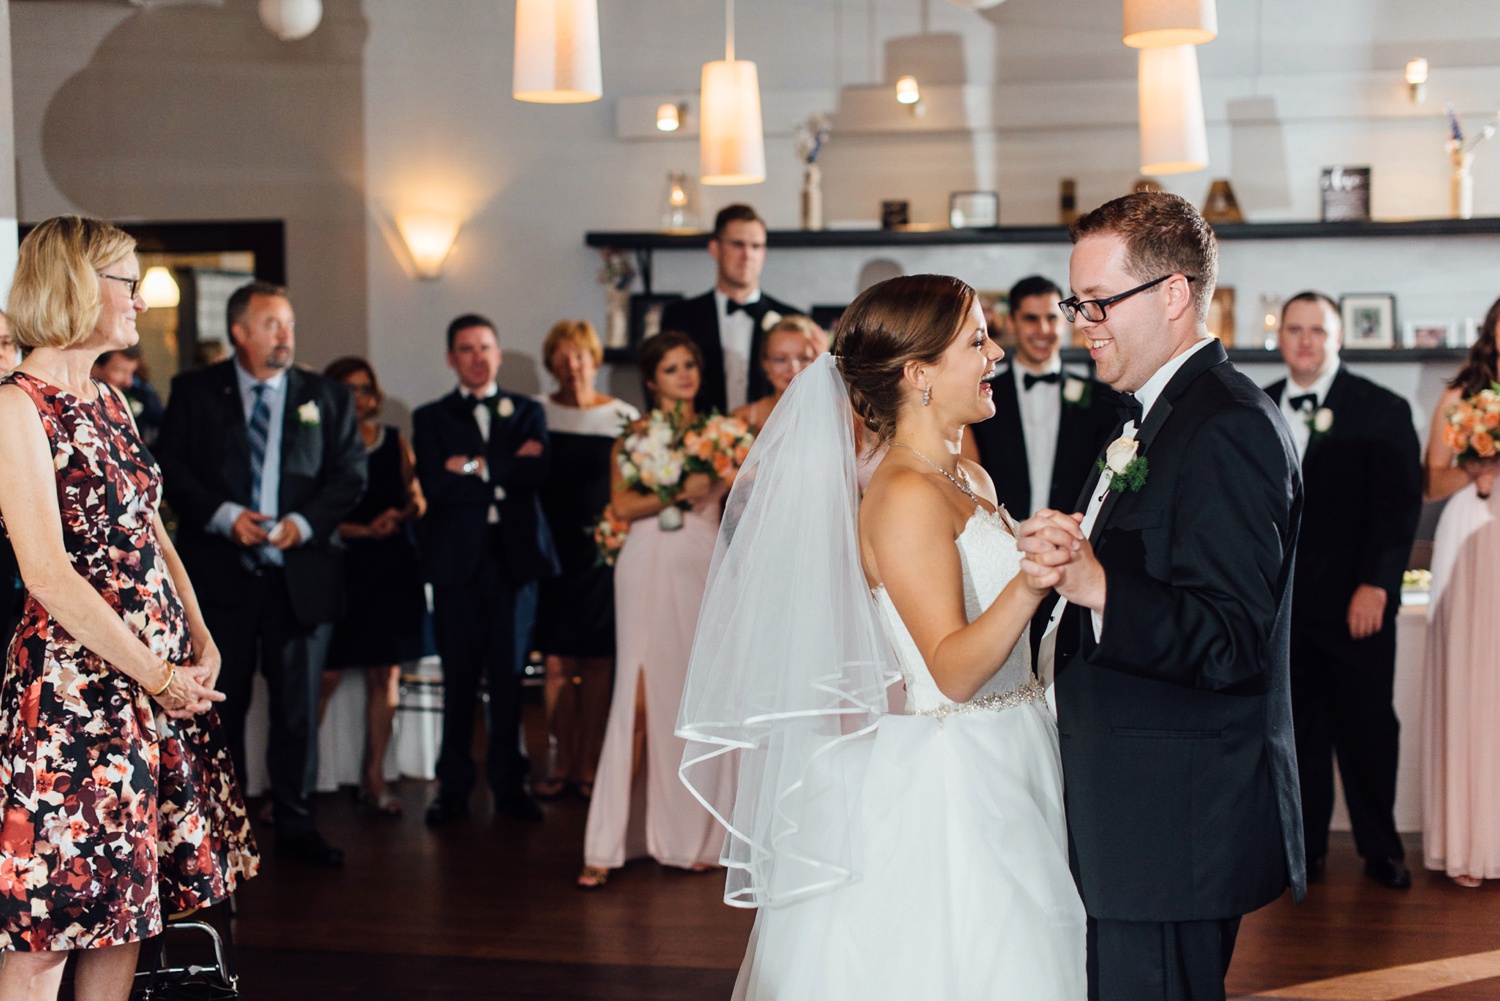 Lauren + Alec - Manayunk Brewing Company Wedding - Philadelphia Wedding Photographer - Alison Dunn Photography photo